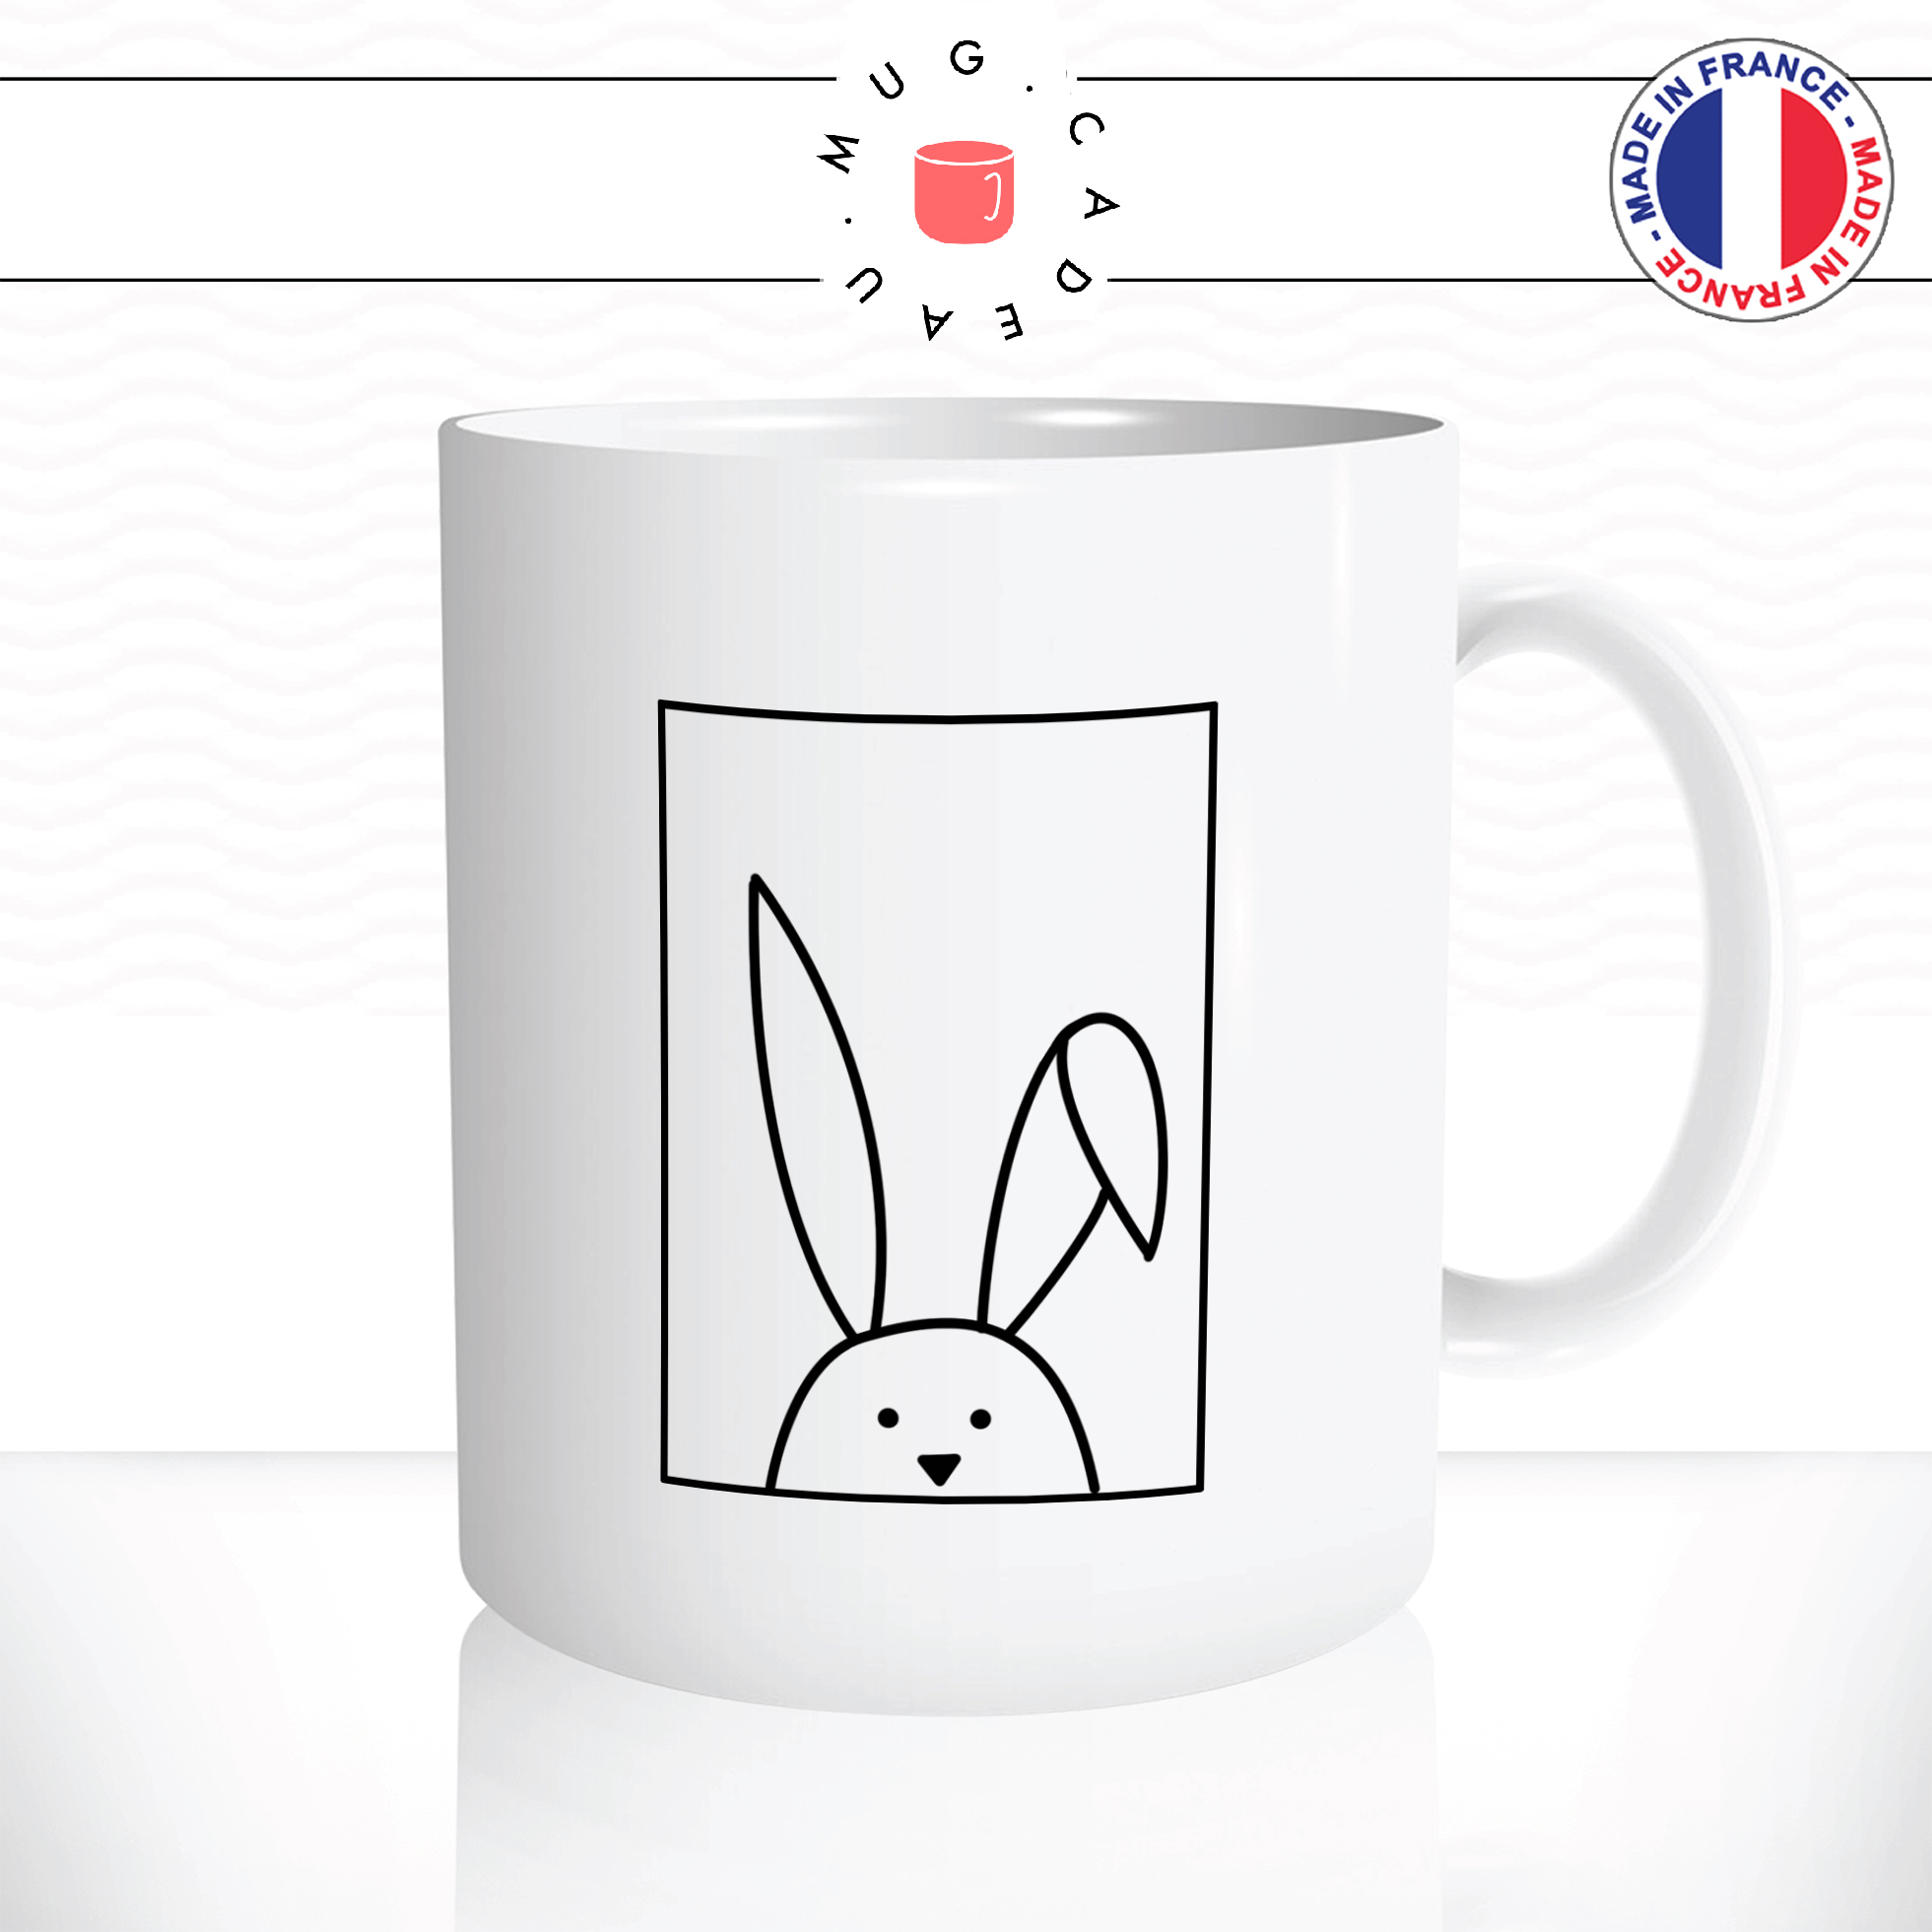 mug-tasse-ref5-lapin-dessin-noir-carre-cafe-oreilles-tete-cafe-the-mugs-tasses-personnalise-anse-droite